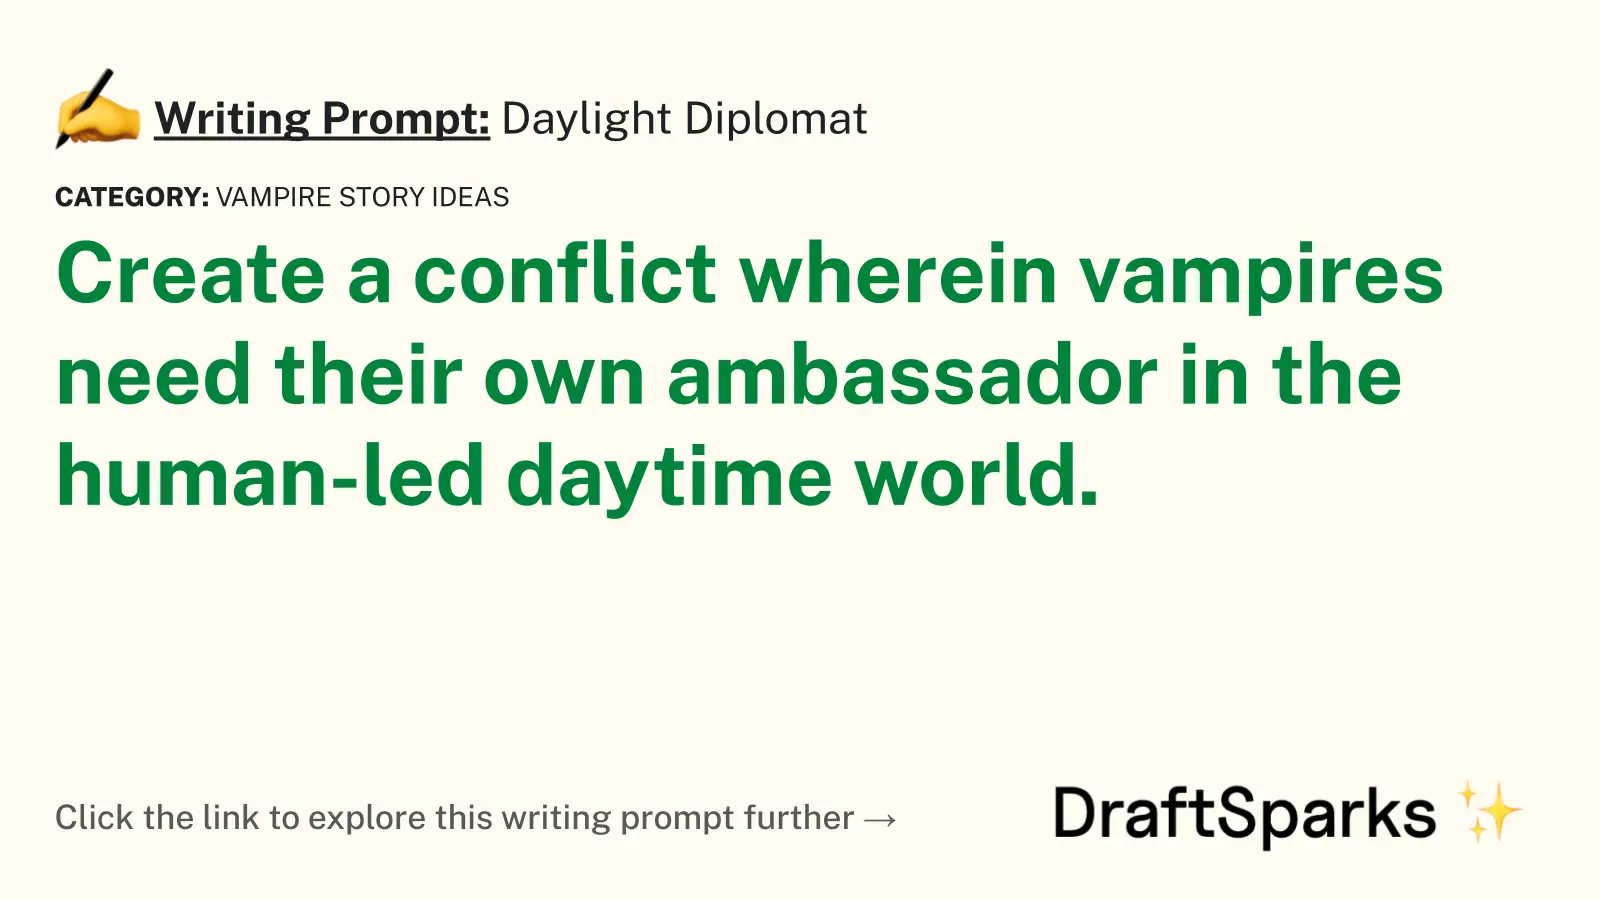 Daylight Diplomat